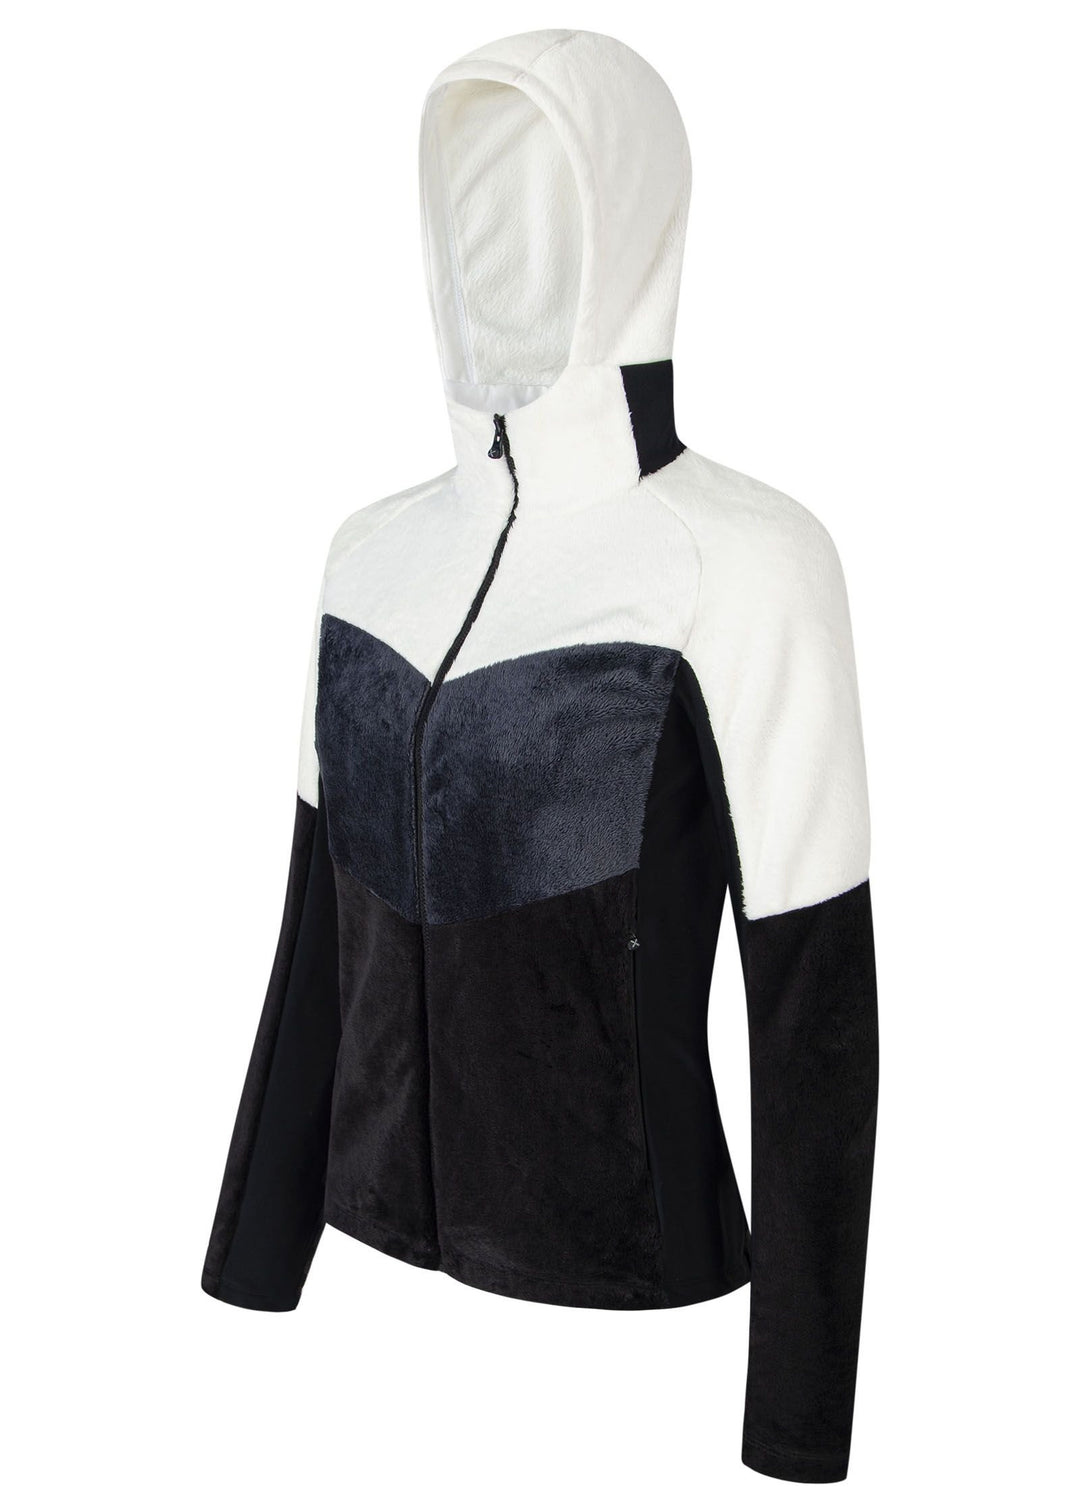 Polar Trilogy Jacket Woman - Bianco/Antracite (92) - Blogside